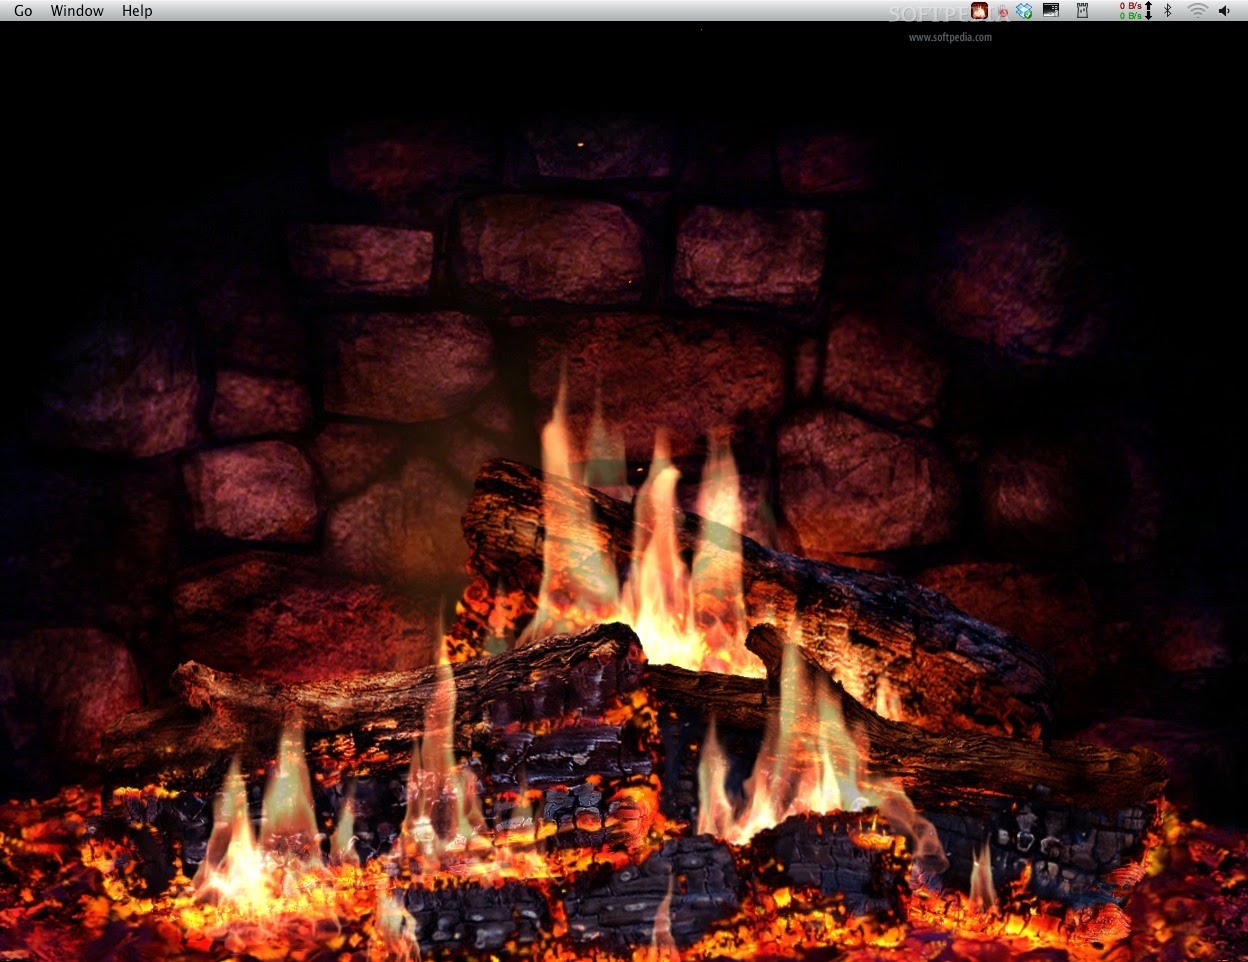 crackling fireplace screensaver free